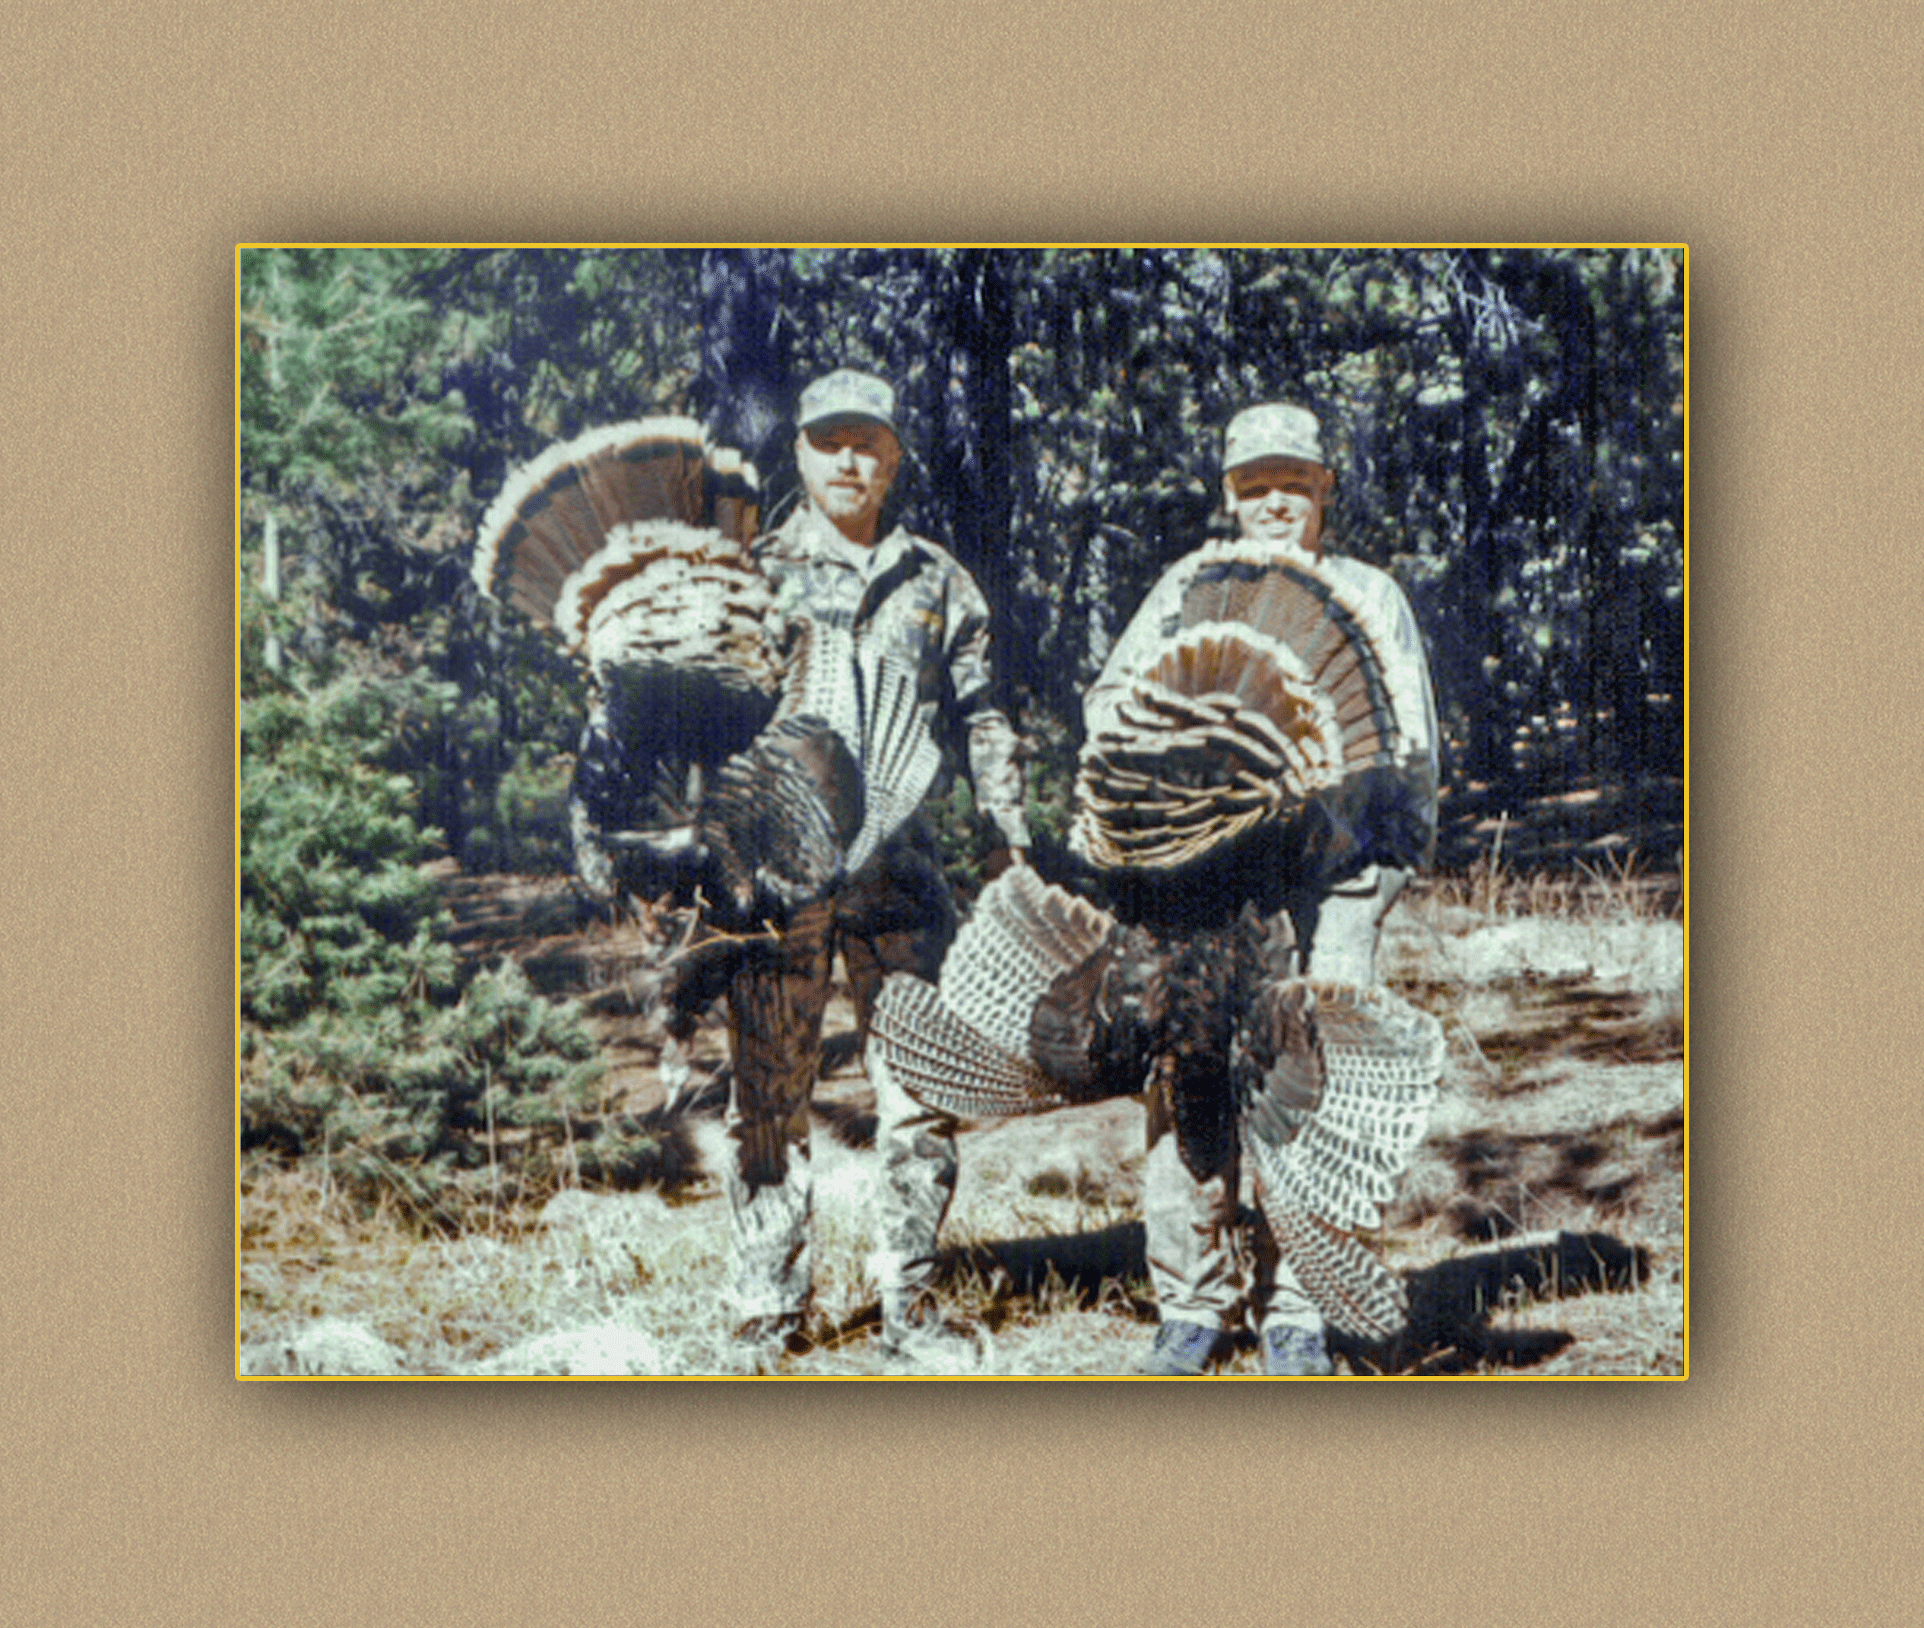 yellowhorn outfitters arizona hunting yellowhorn arizona bighorn sheep guiding outfitting deer elk antelope photography